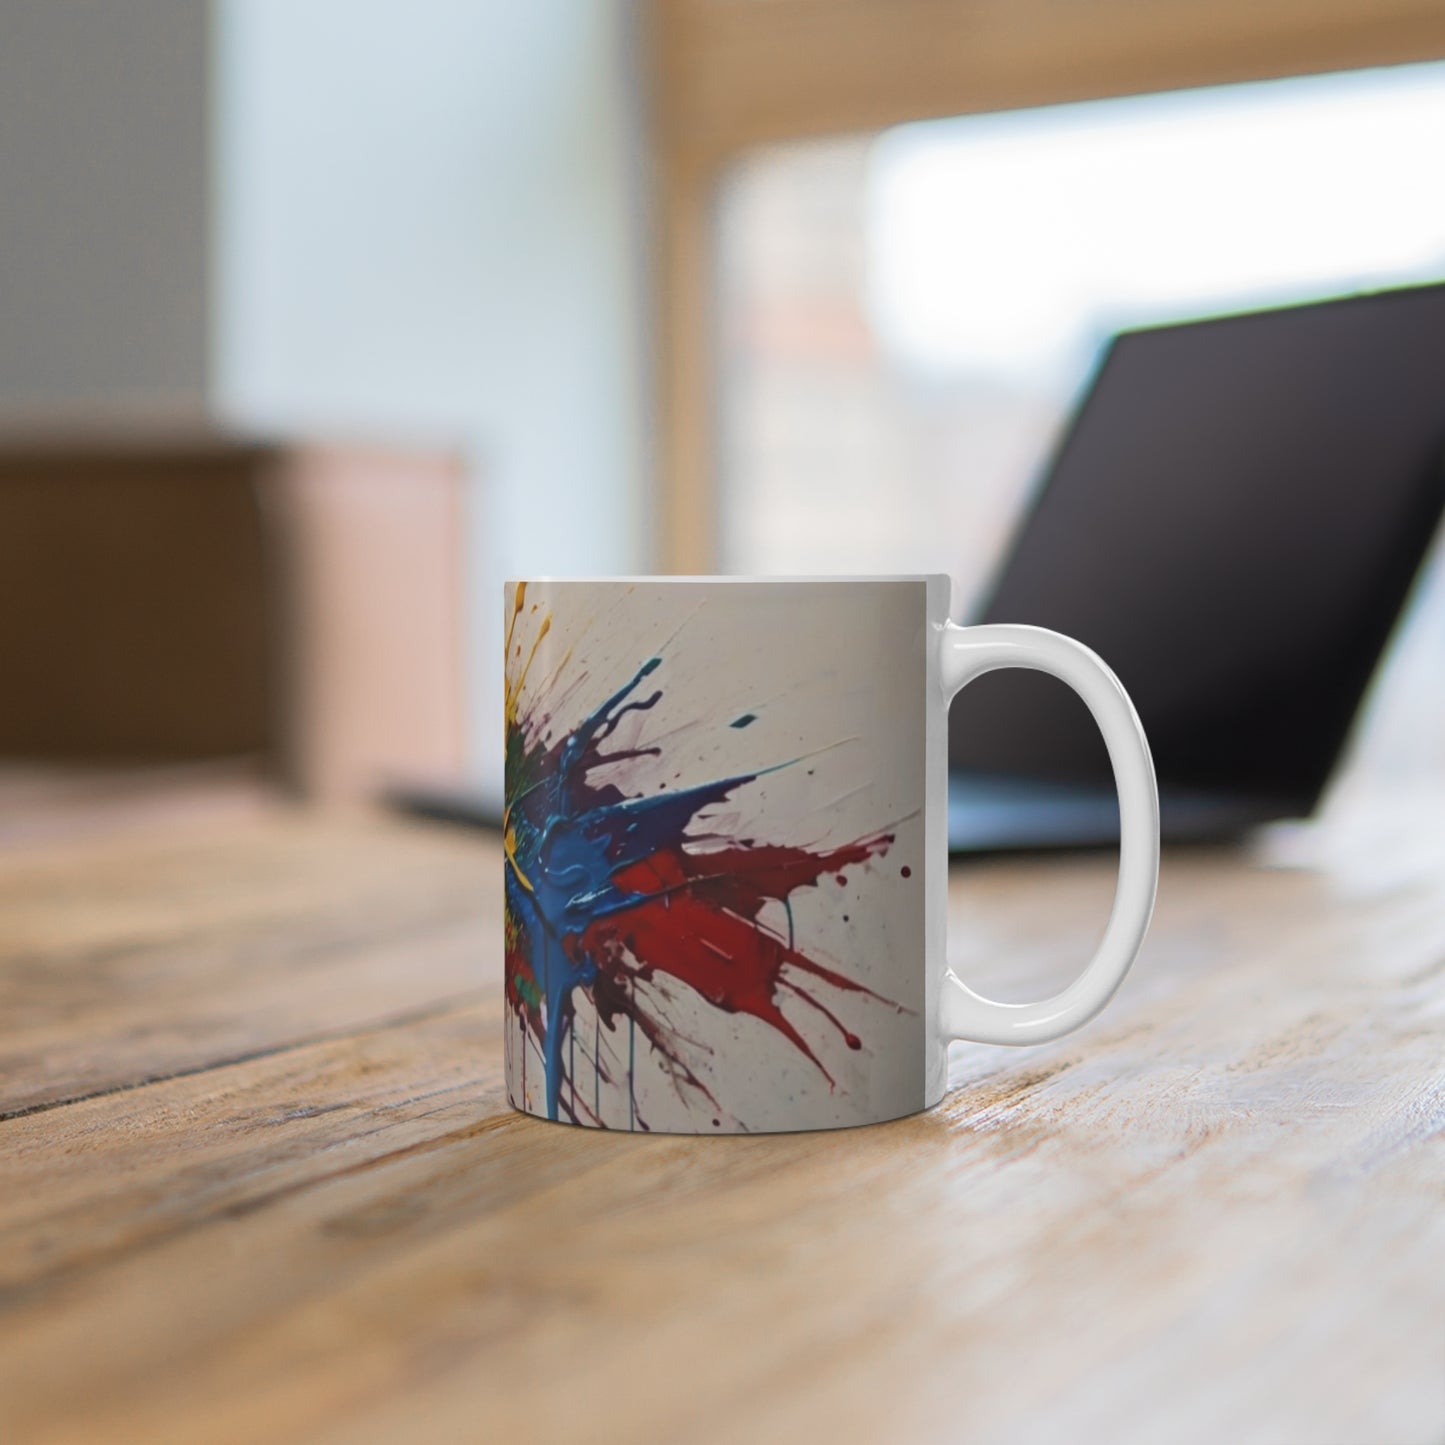 Messy Paint Splatter Mug - Ceramic Coffee Mug 11oz